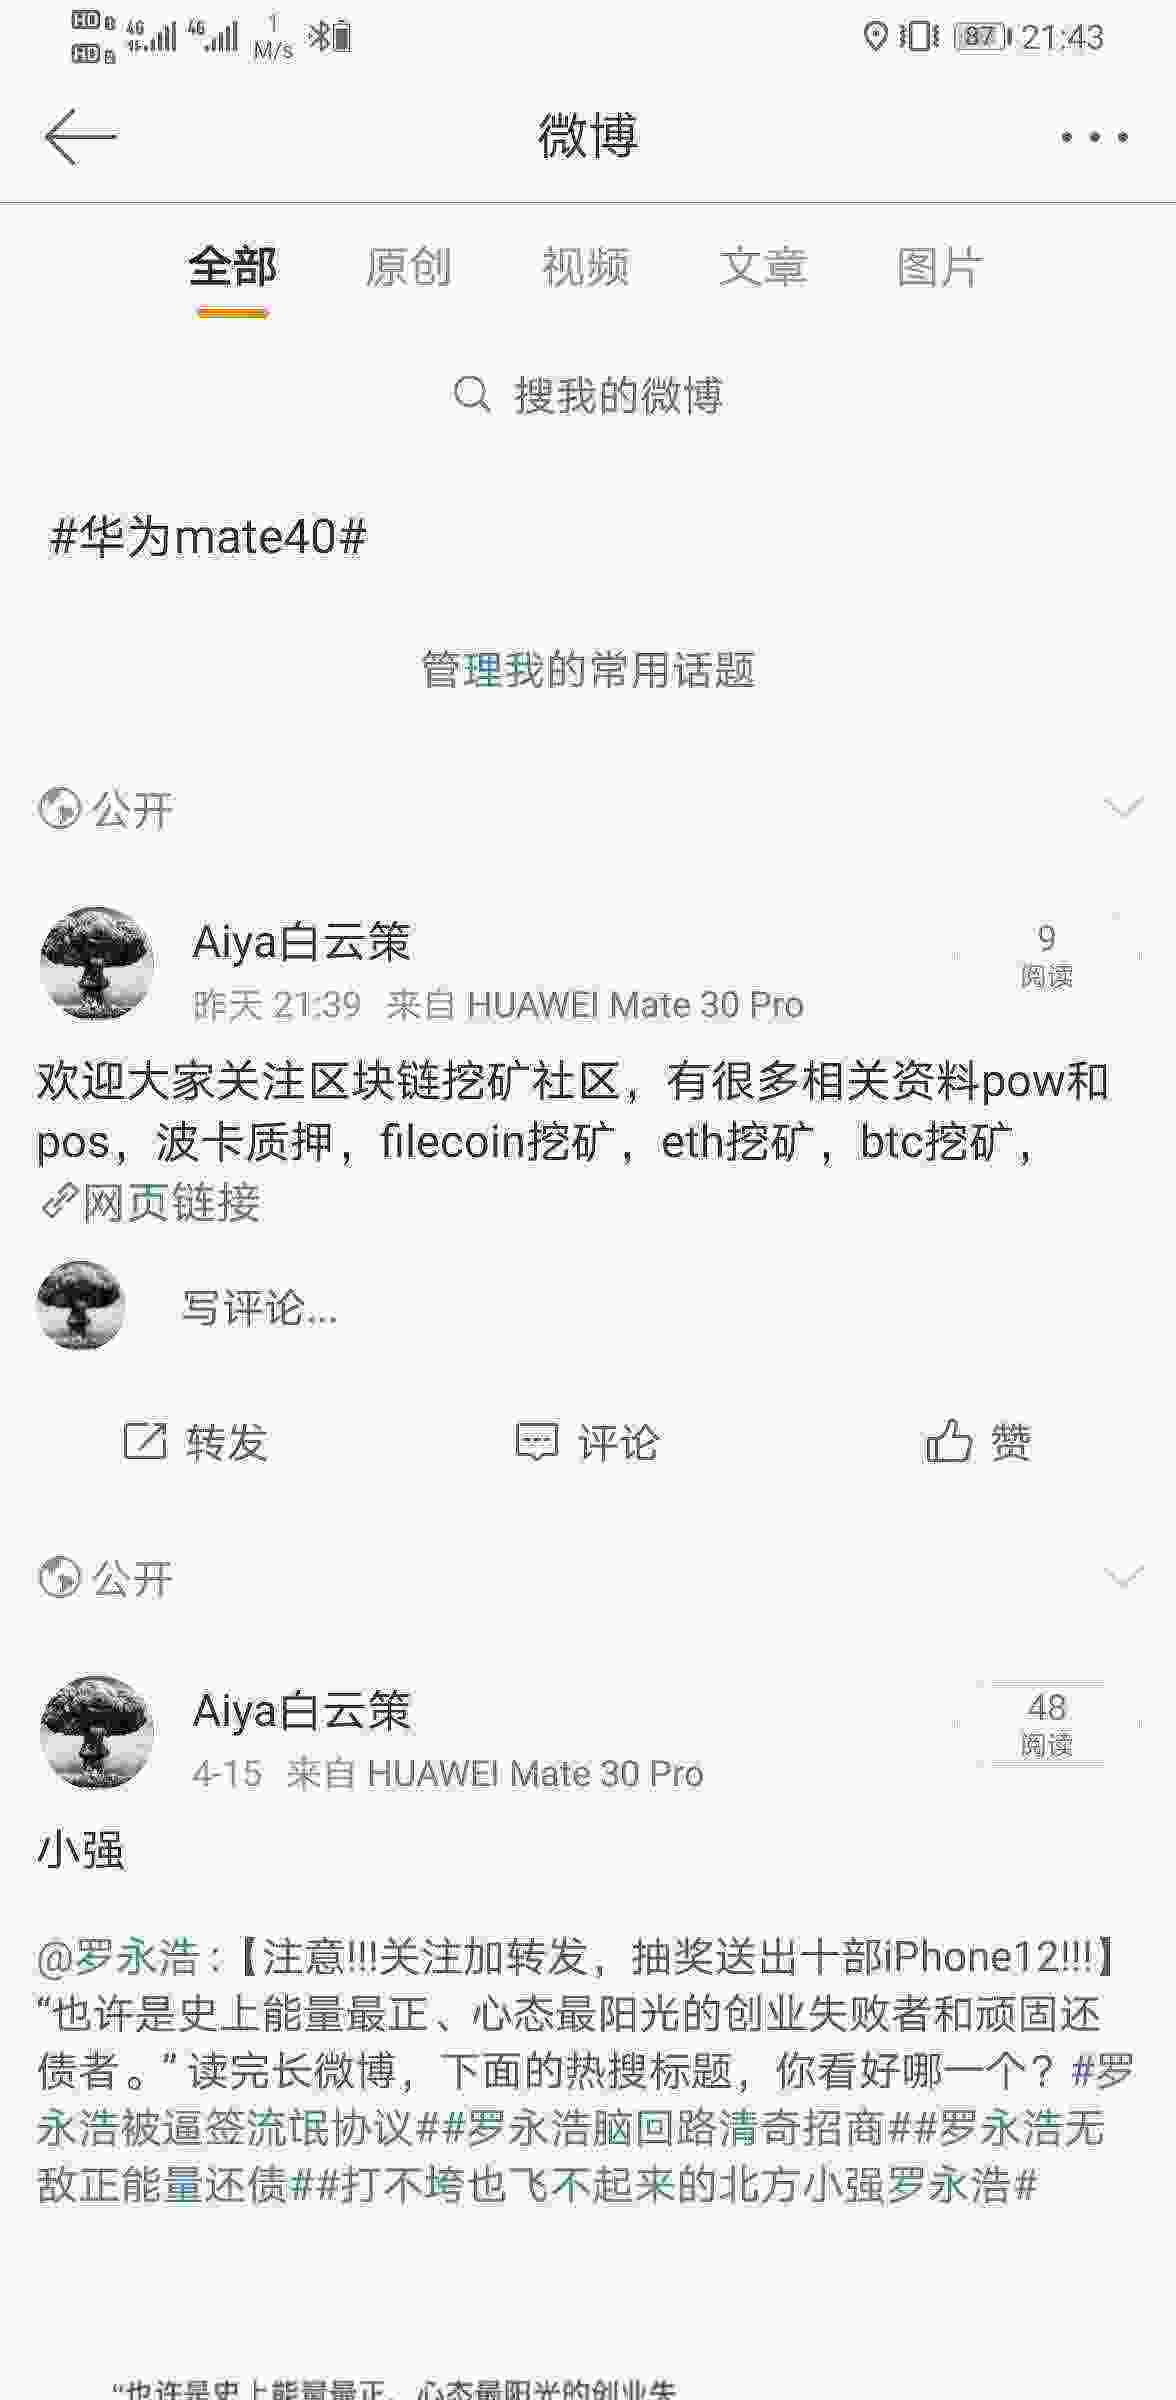 Screenshot_20210421_214341_com.sina.weibo.jpg